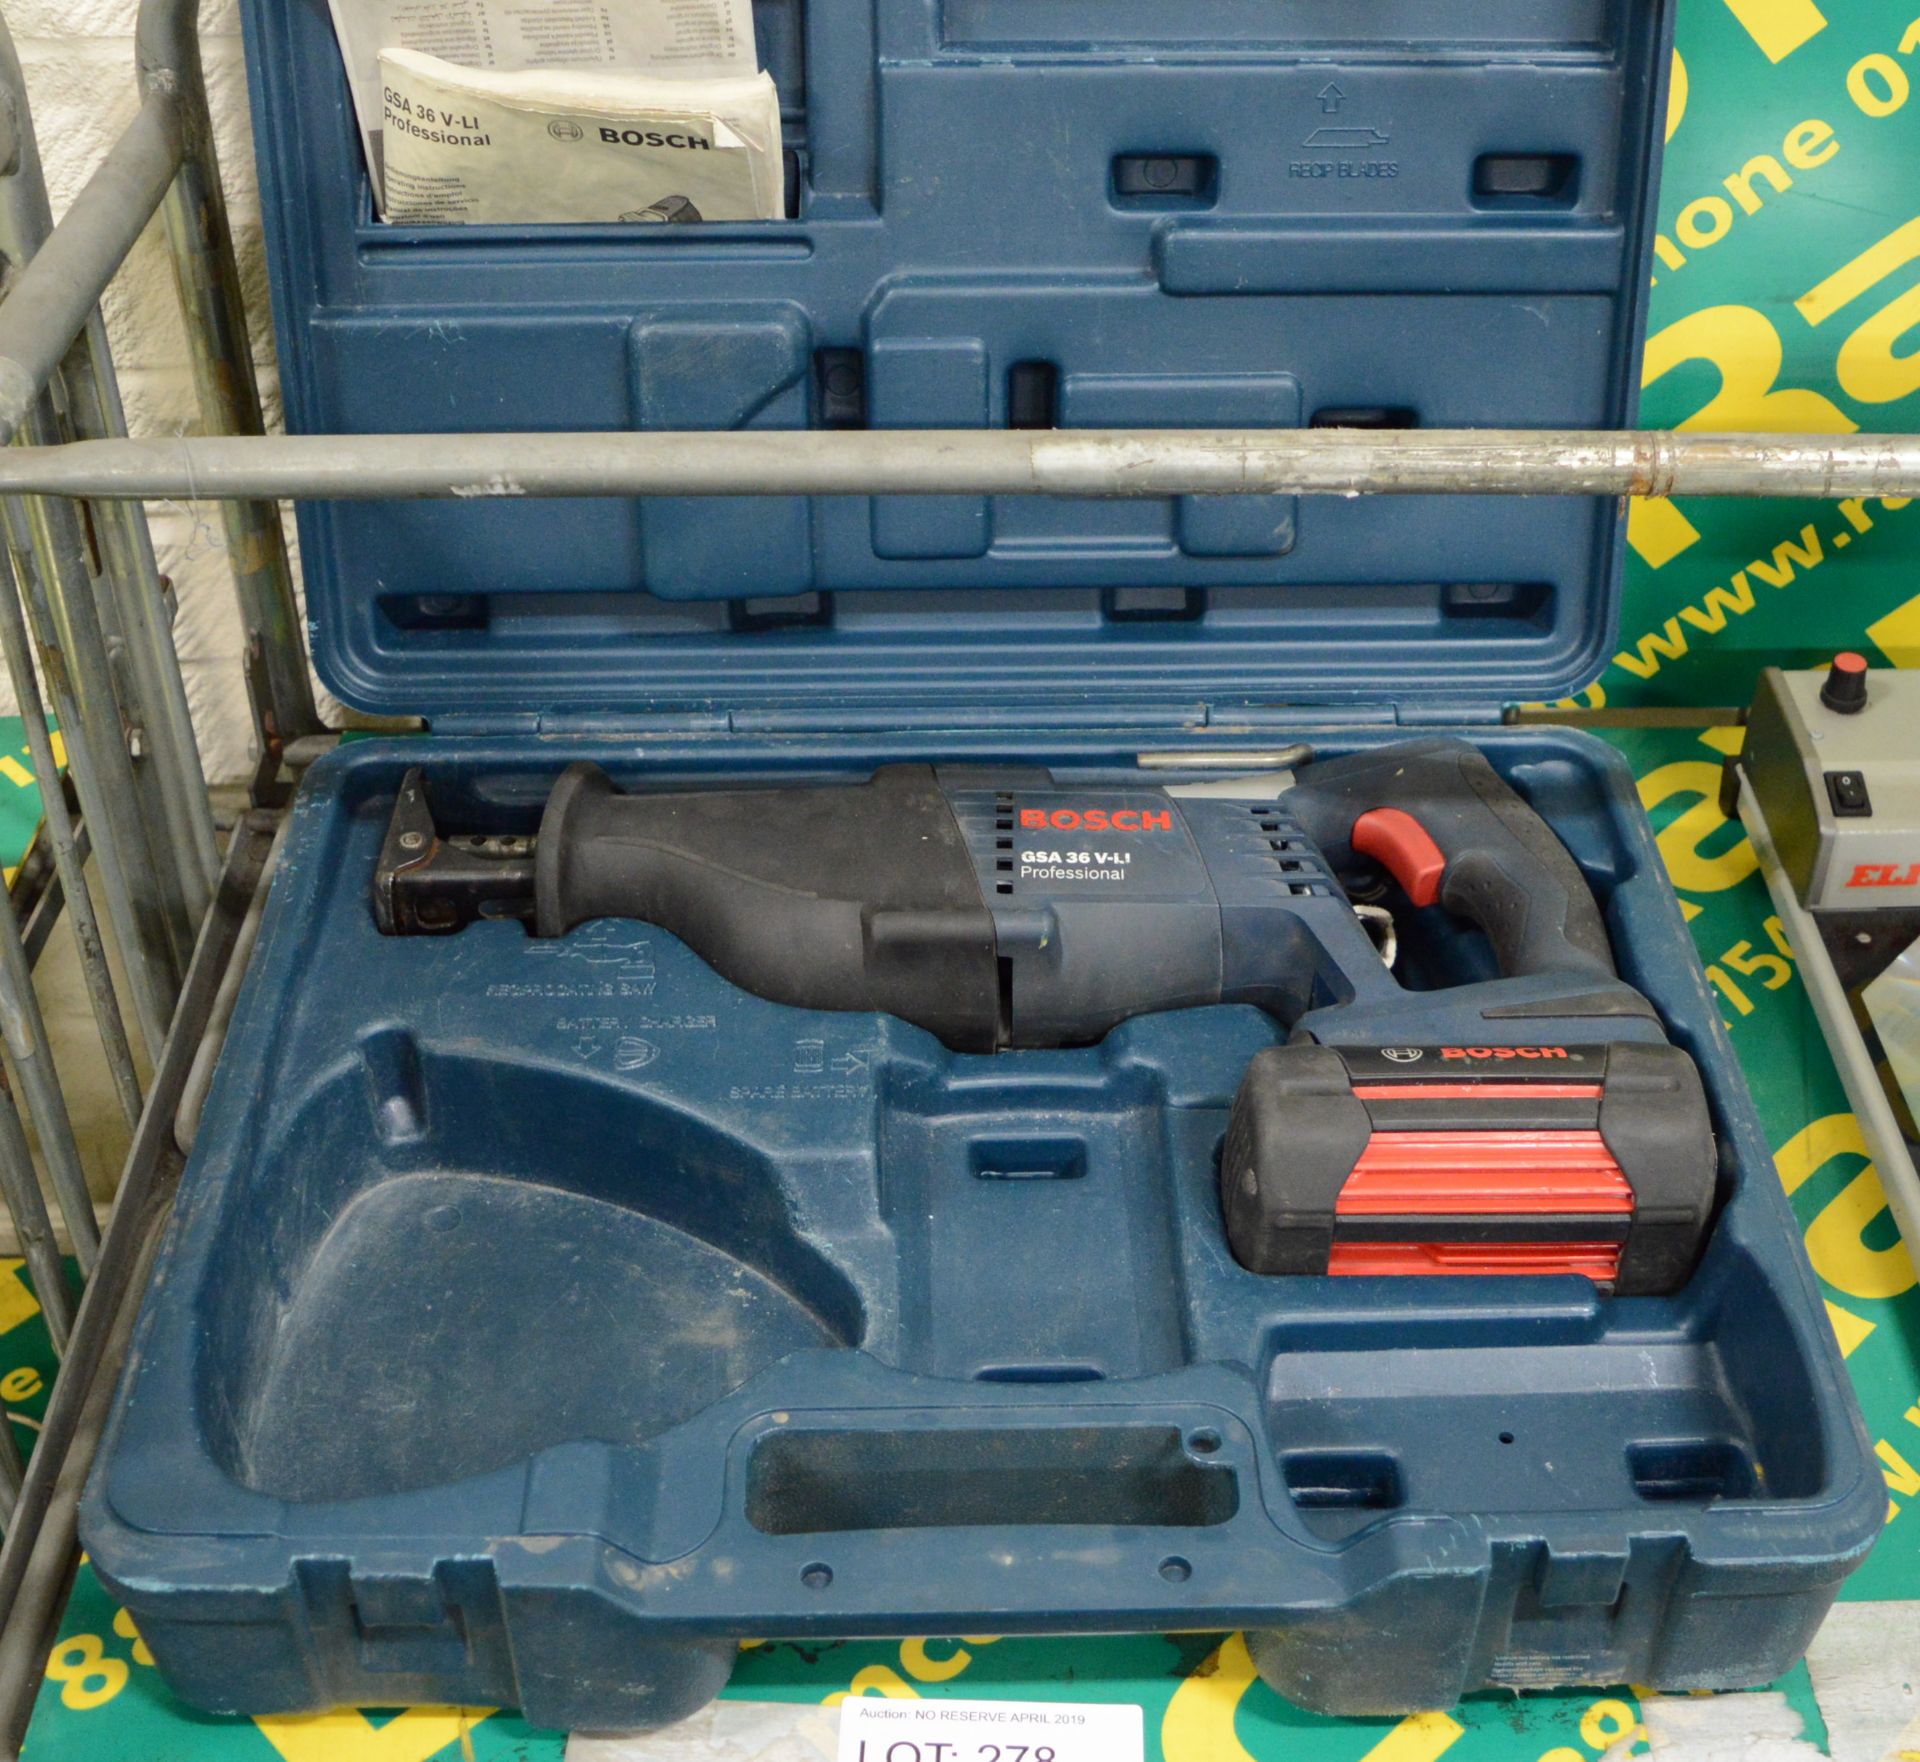 Bosch GSA 36 V-LI Reciprocating Saw - No charger.